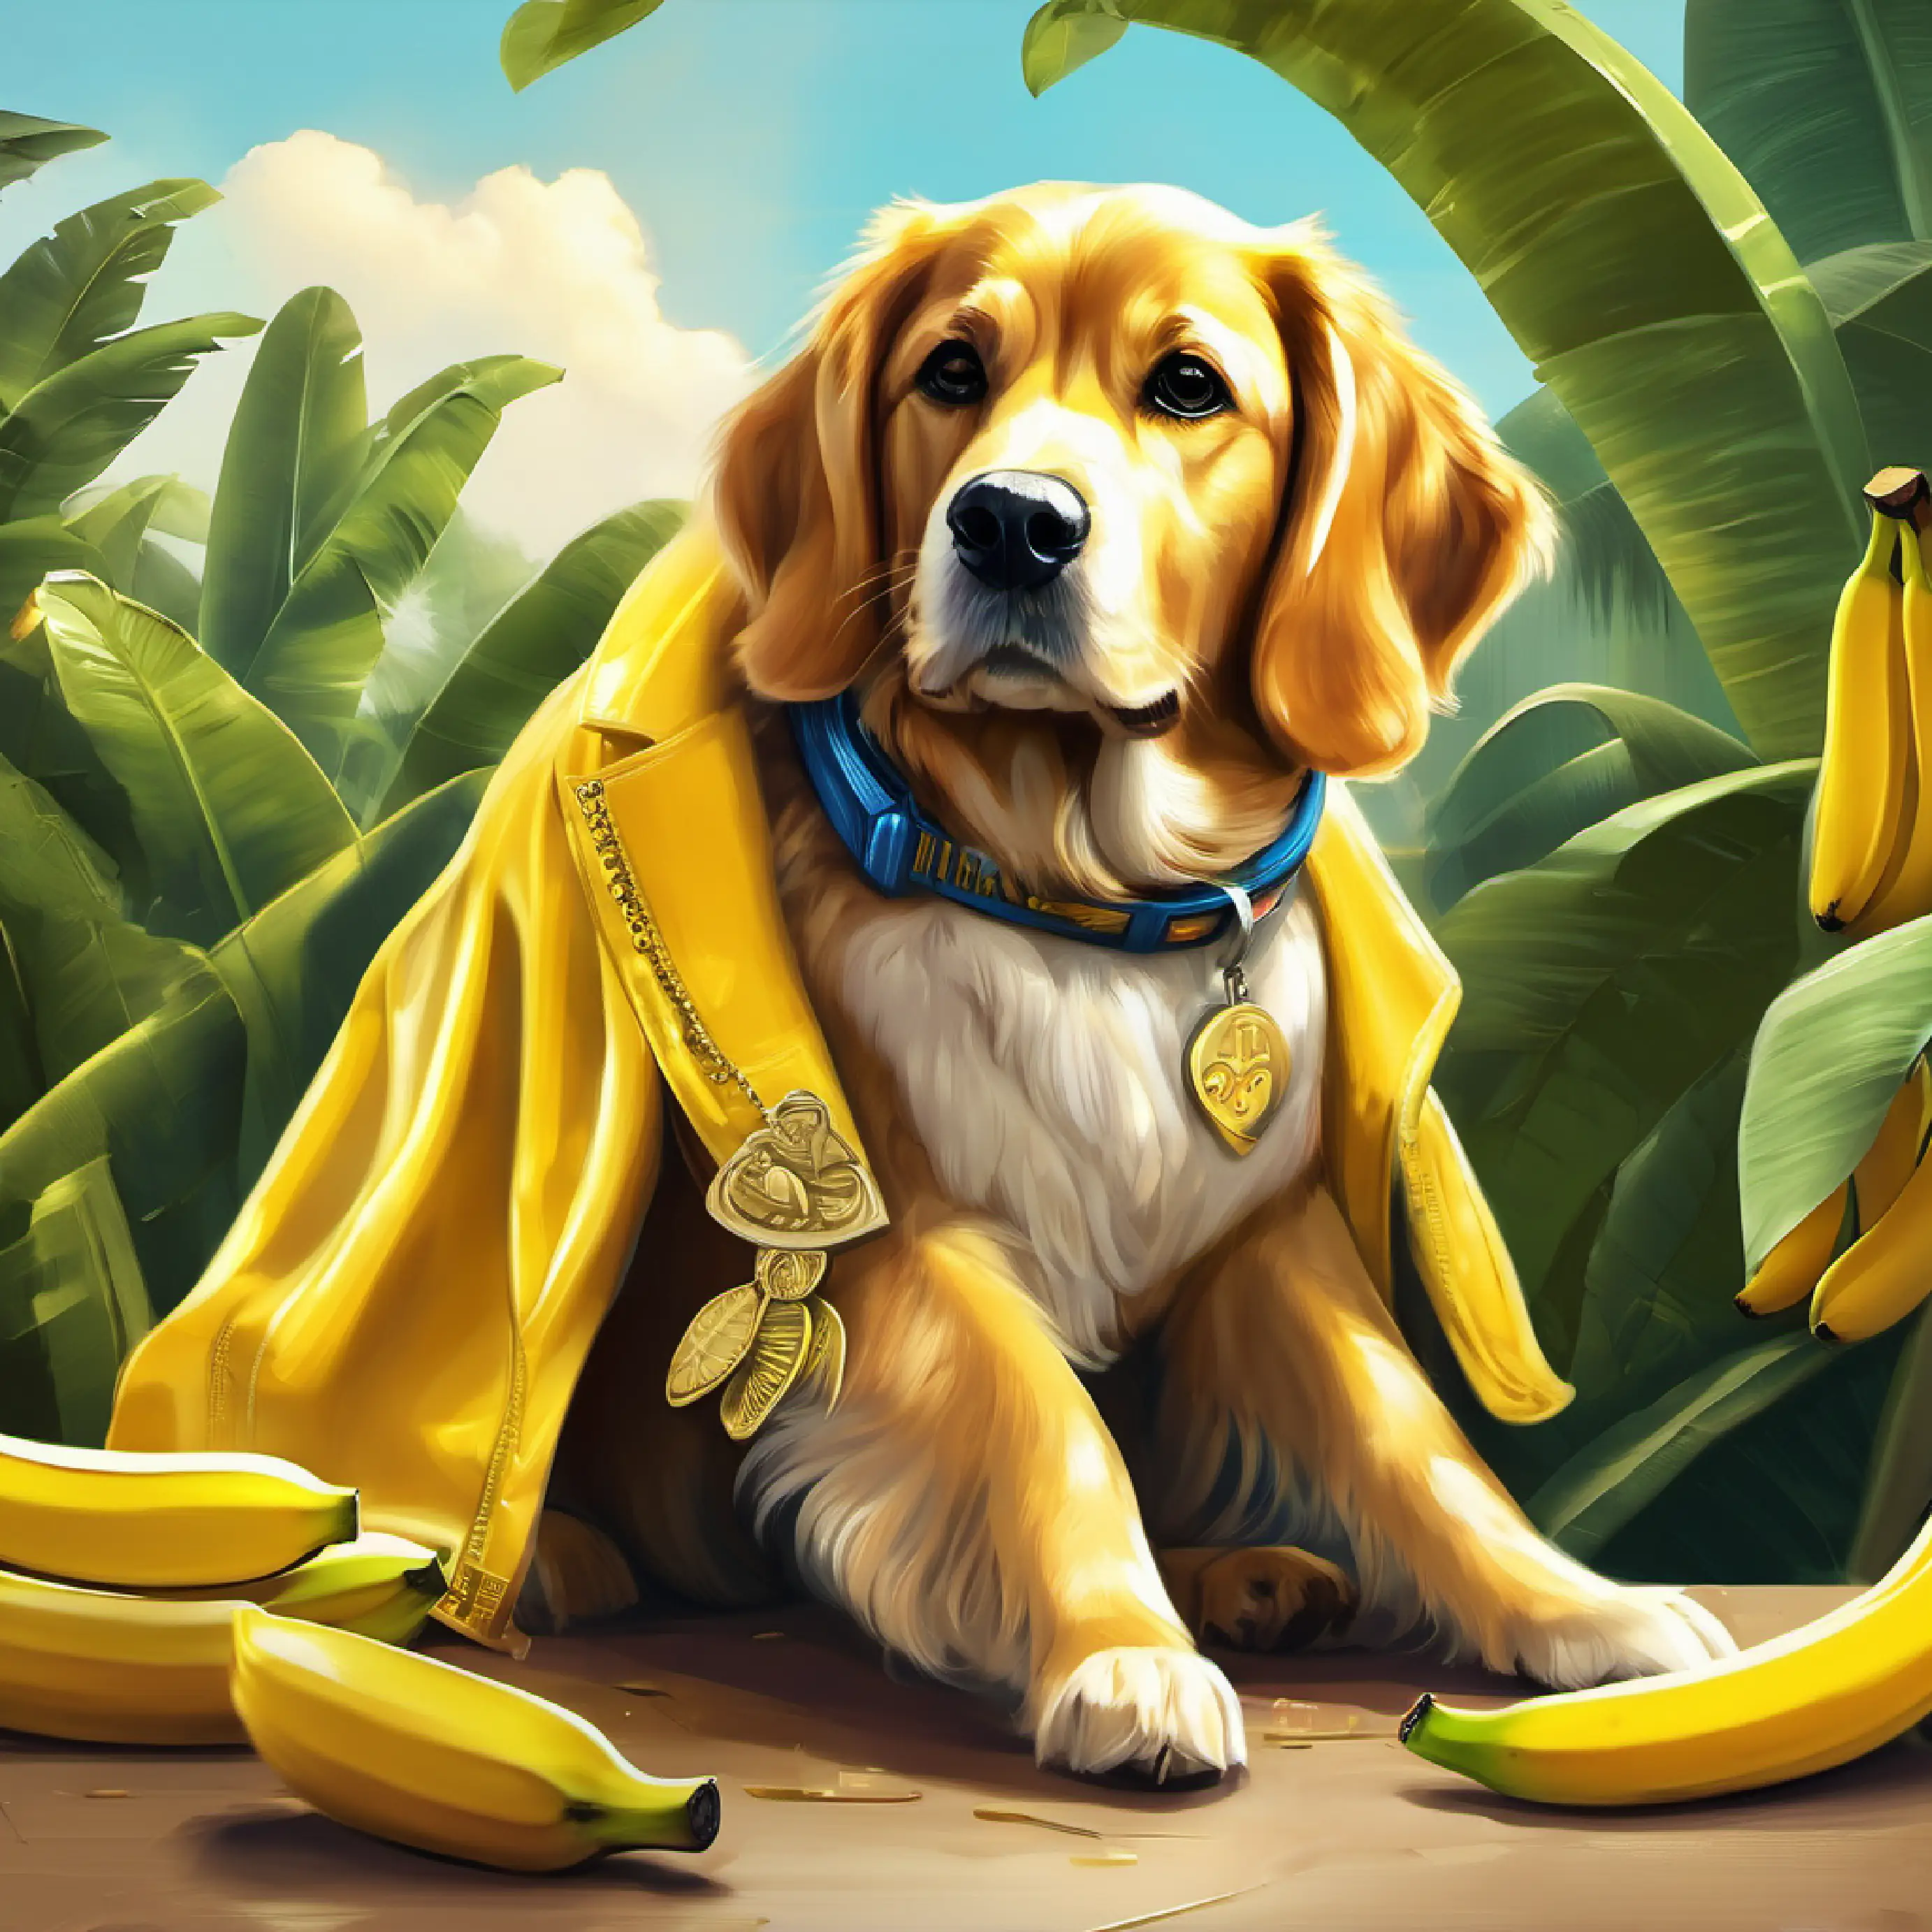 Introduction of Golden coat, loves bananas, smart dog, the dog who loves bananas.